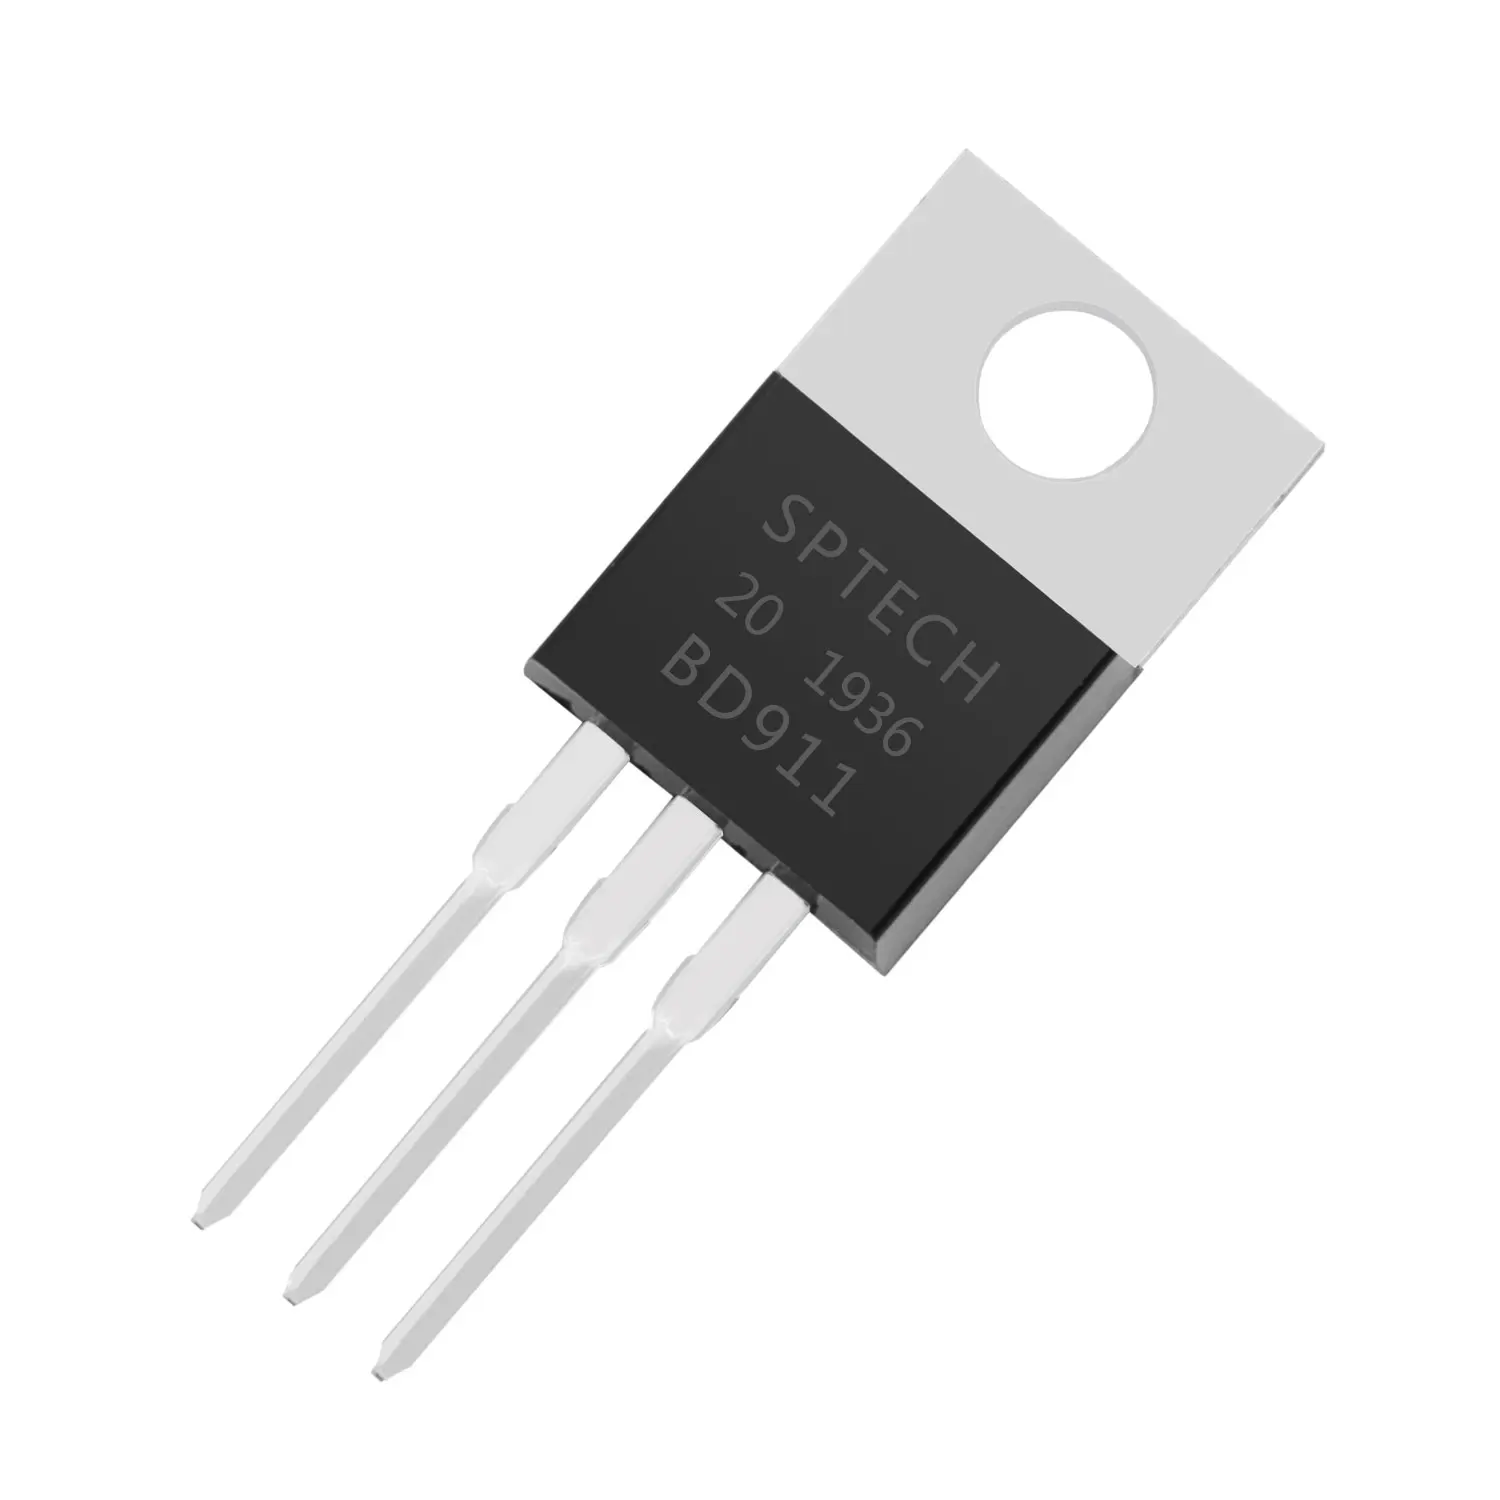 5pcs 2SK3563 TO-220 K3563 Transistor 100% Good